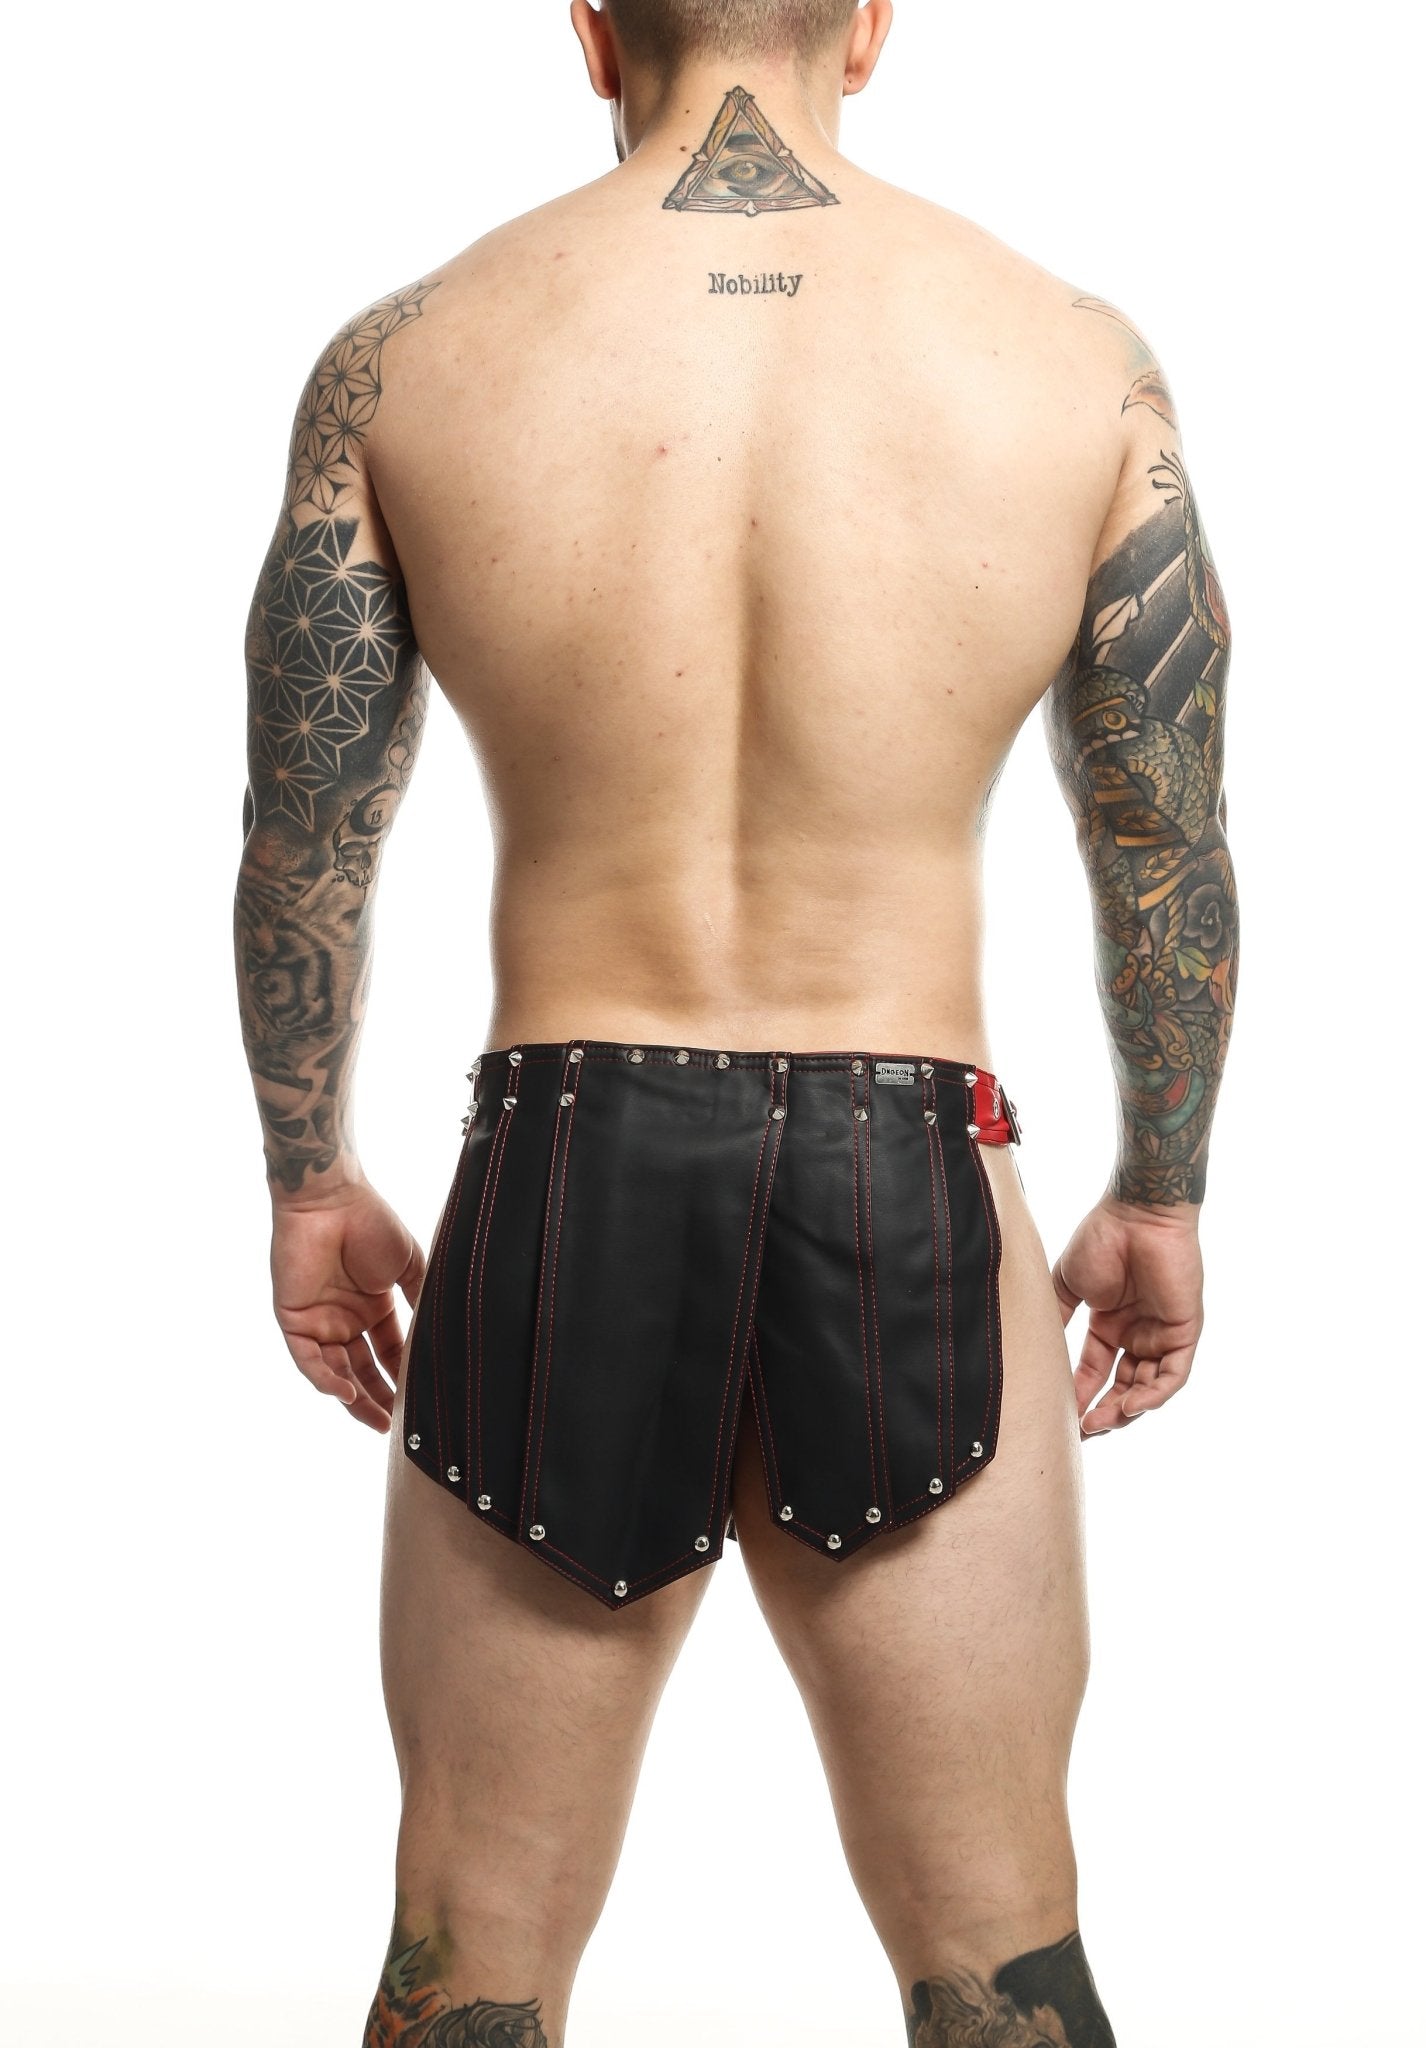 Male Basics Roman Skirt - Jockstraps.com